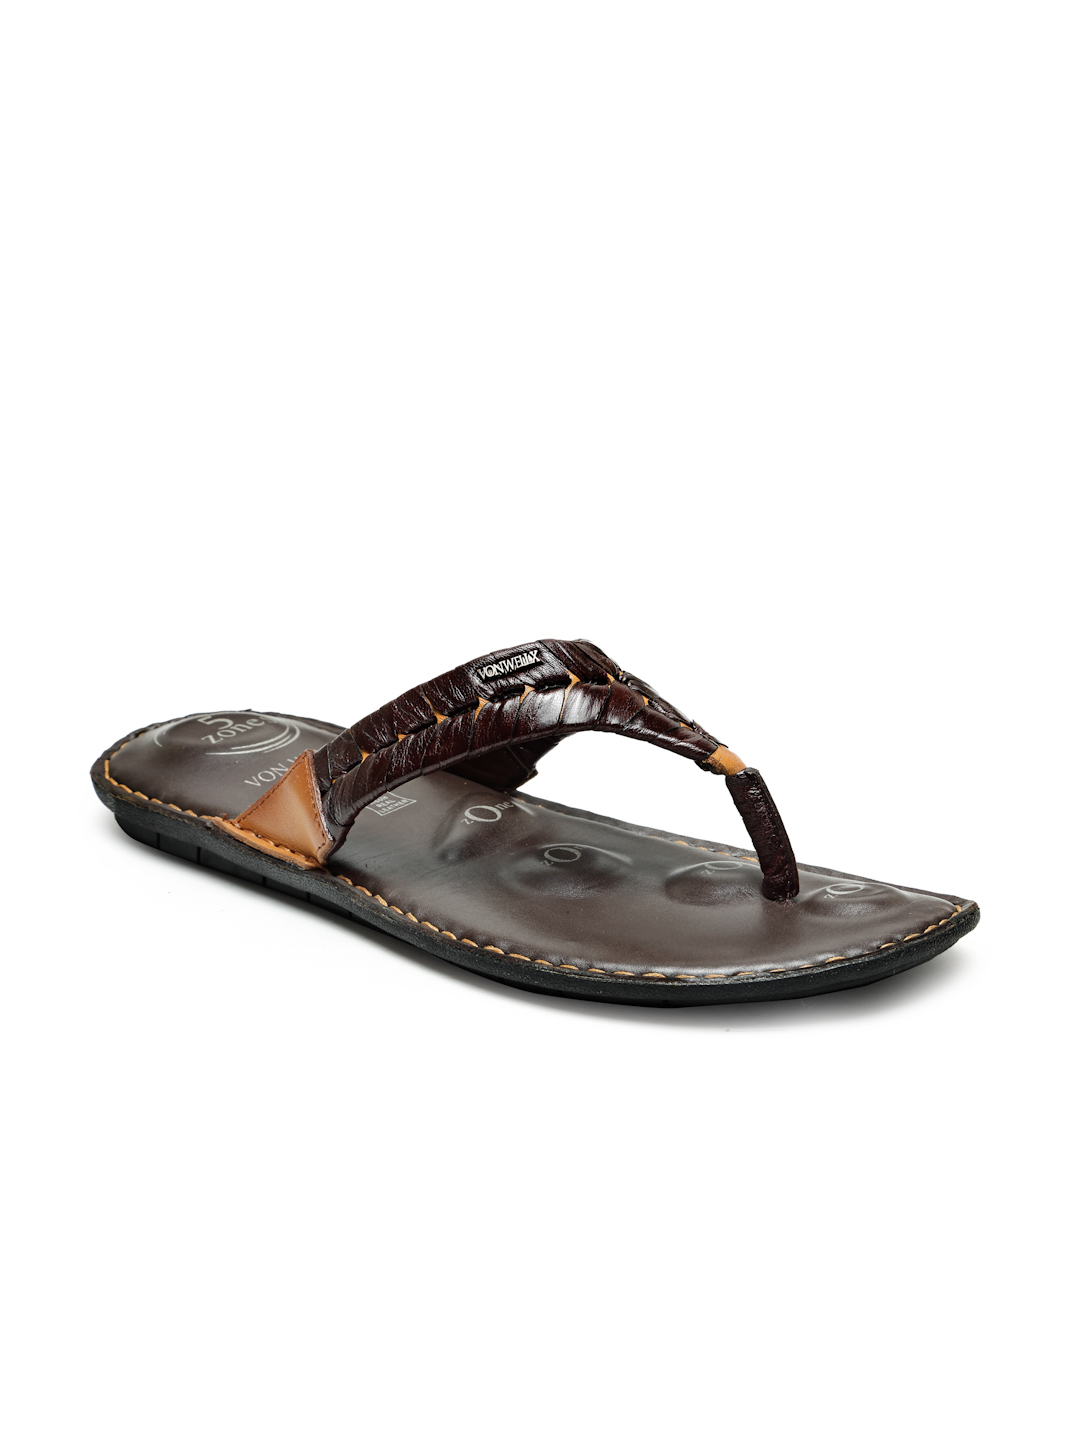 Buy Von Wellx Germany Comfort Men's Tan Slippers Alonso Online in Karnataka